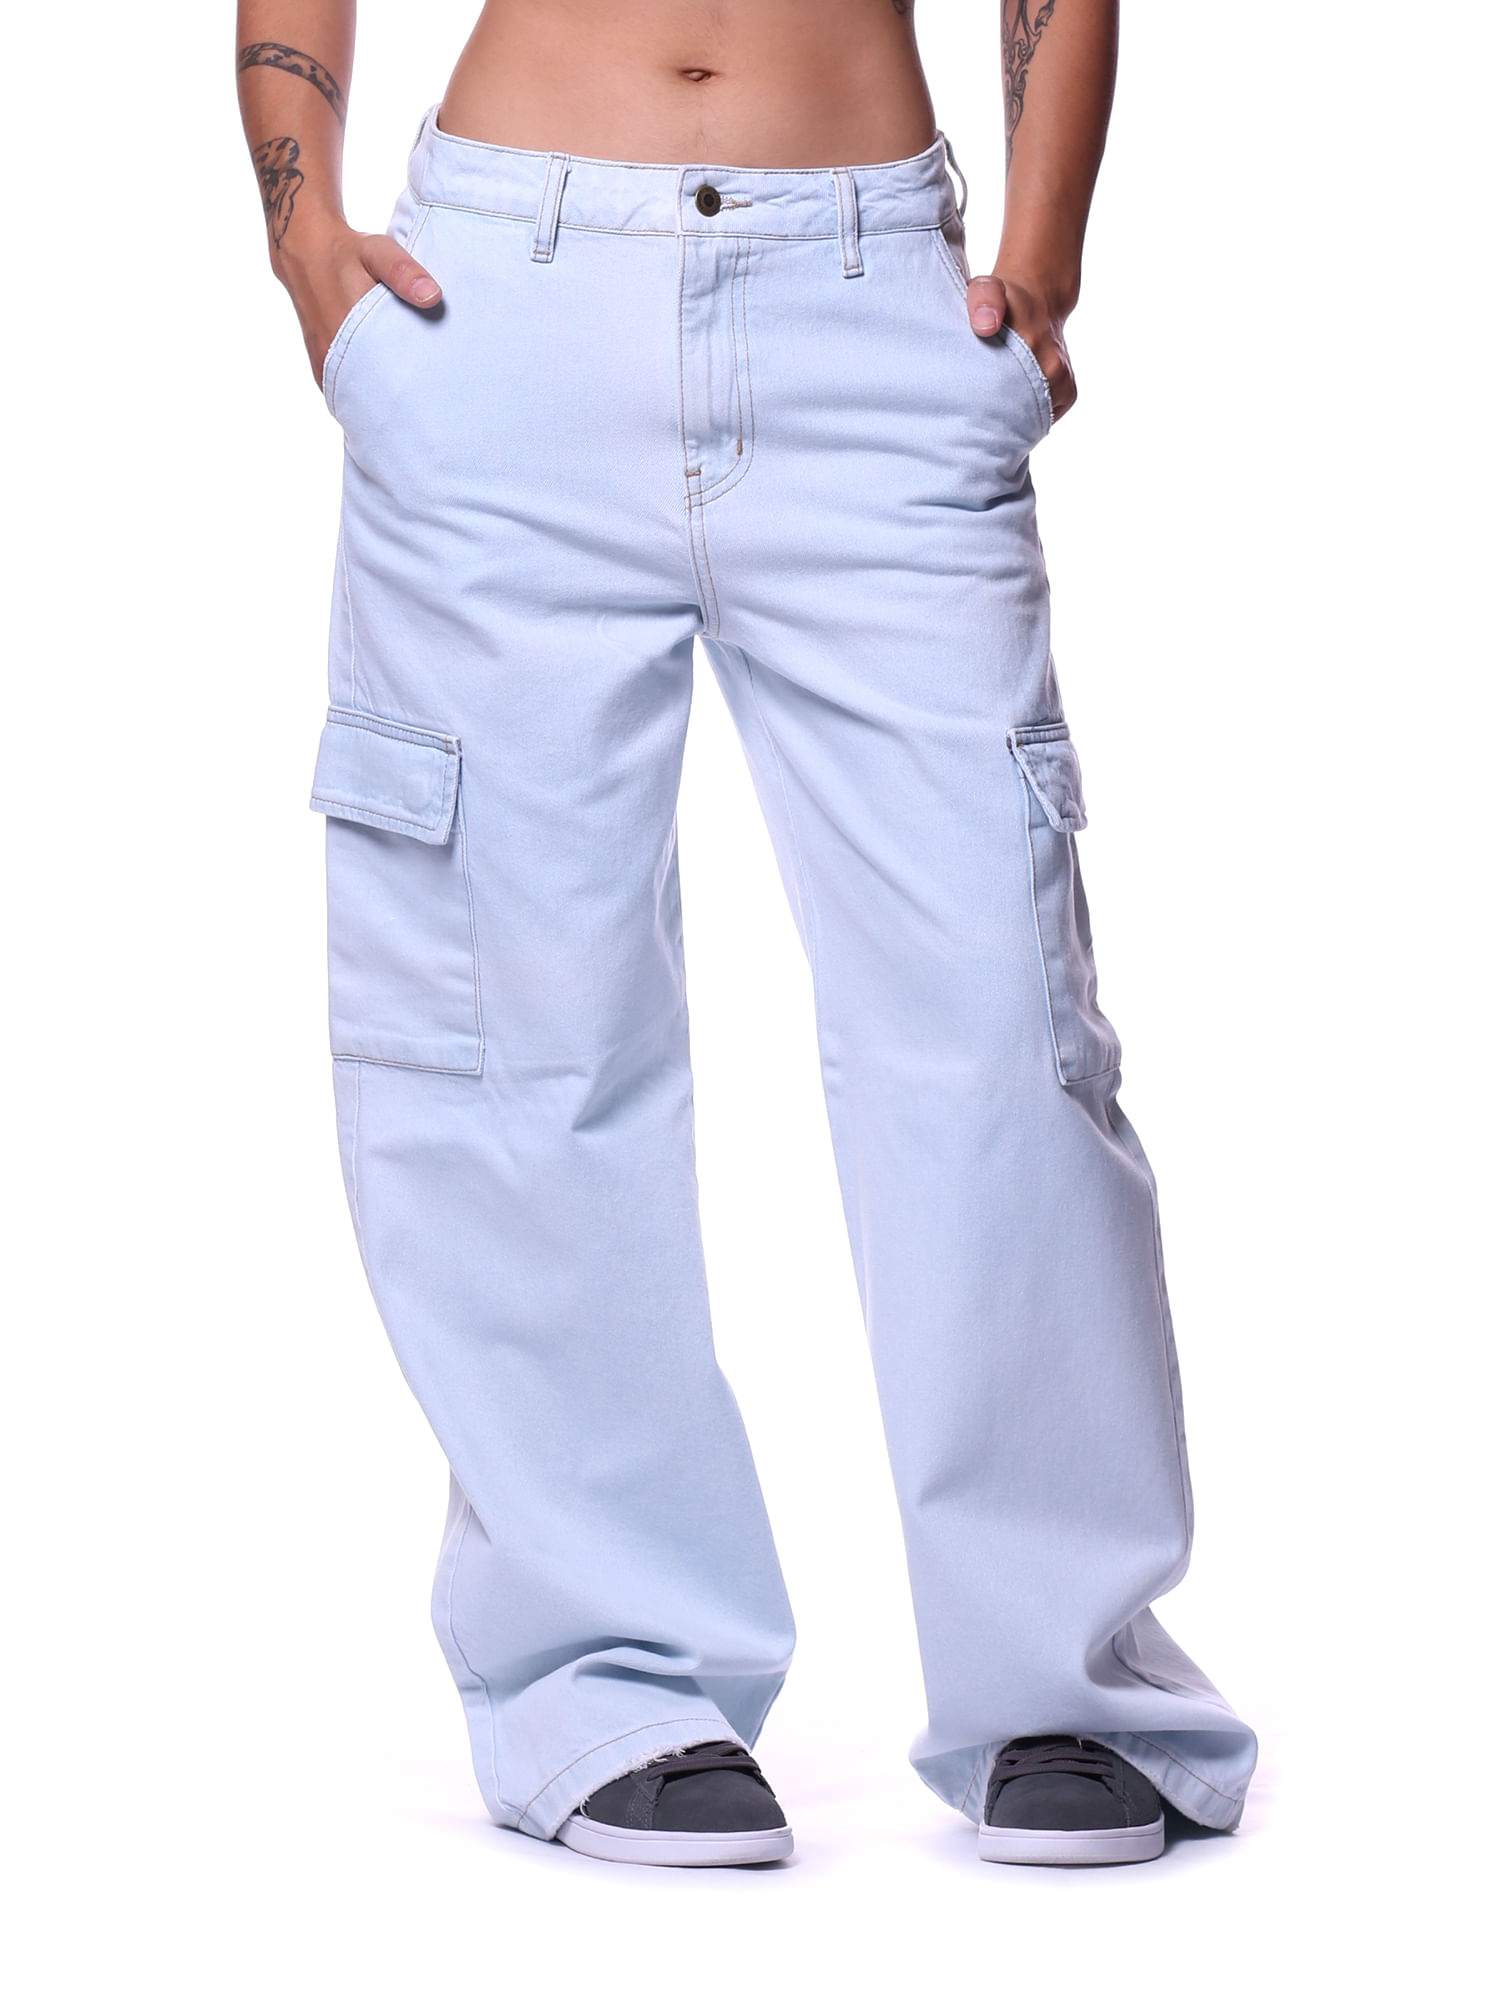 Calca-bali-hai-jeans-cargo-botao-feminina-Jeans-claro